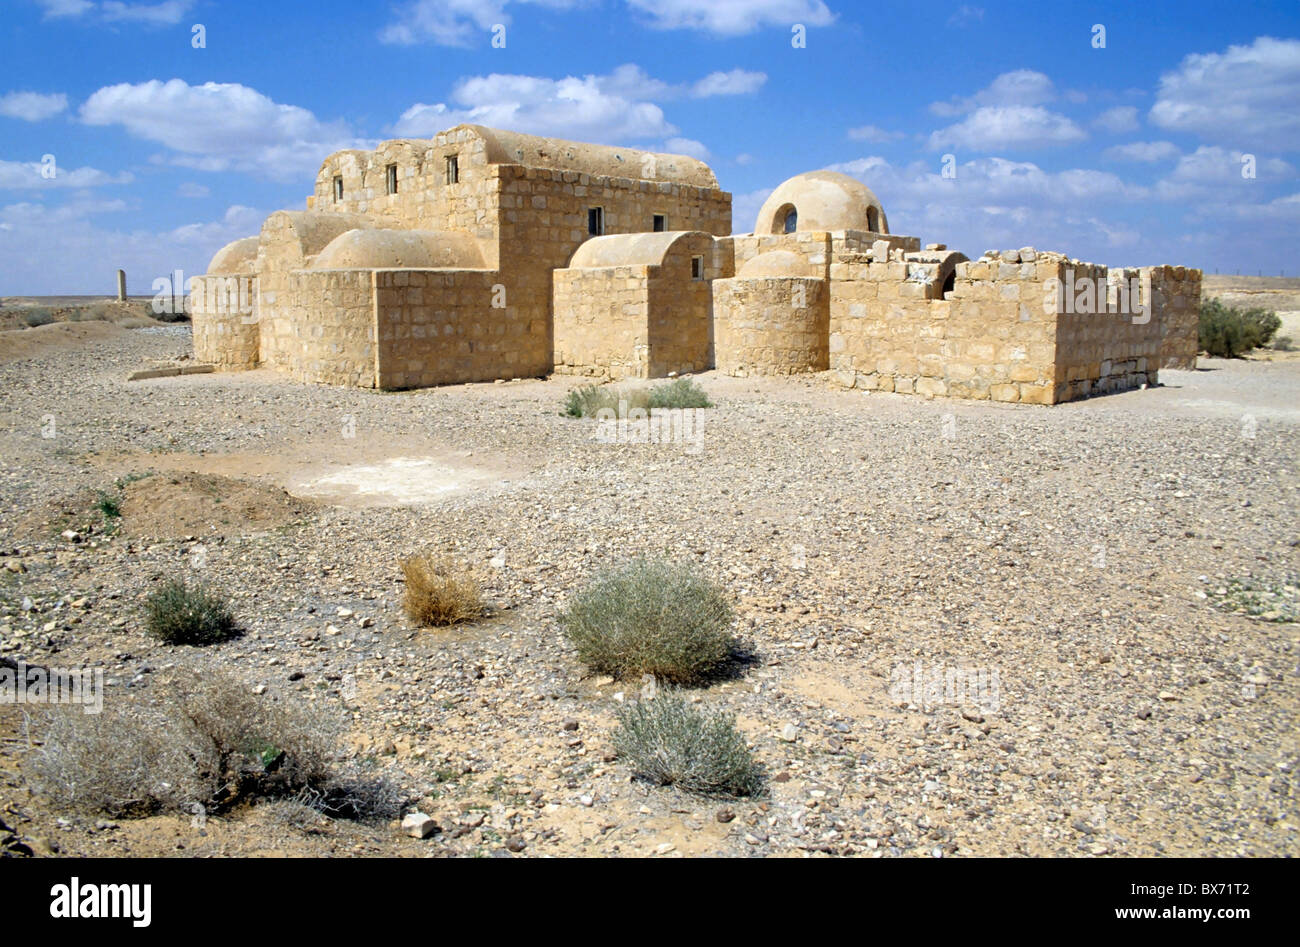 Ruins of Qasr Amra, an 8th century castle fortress in the Arabian desert, Jordan. Stock Photo